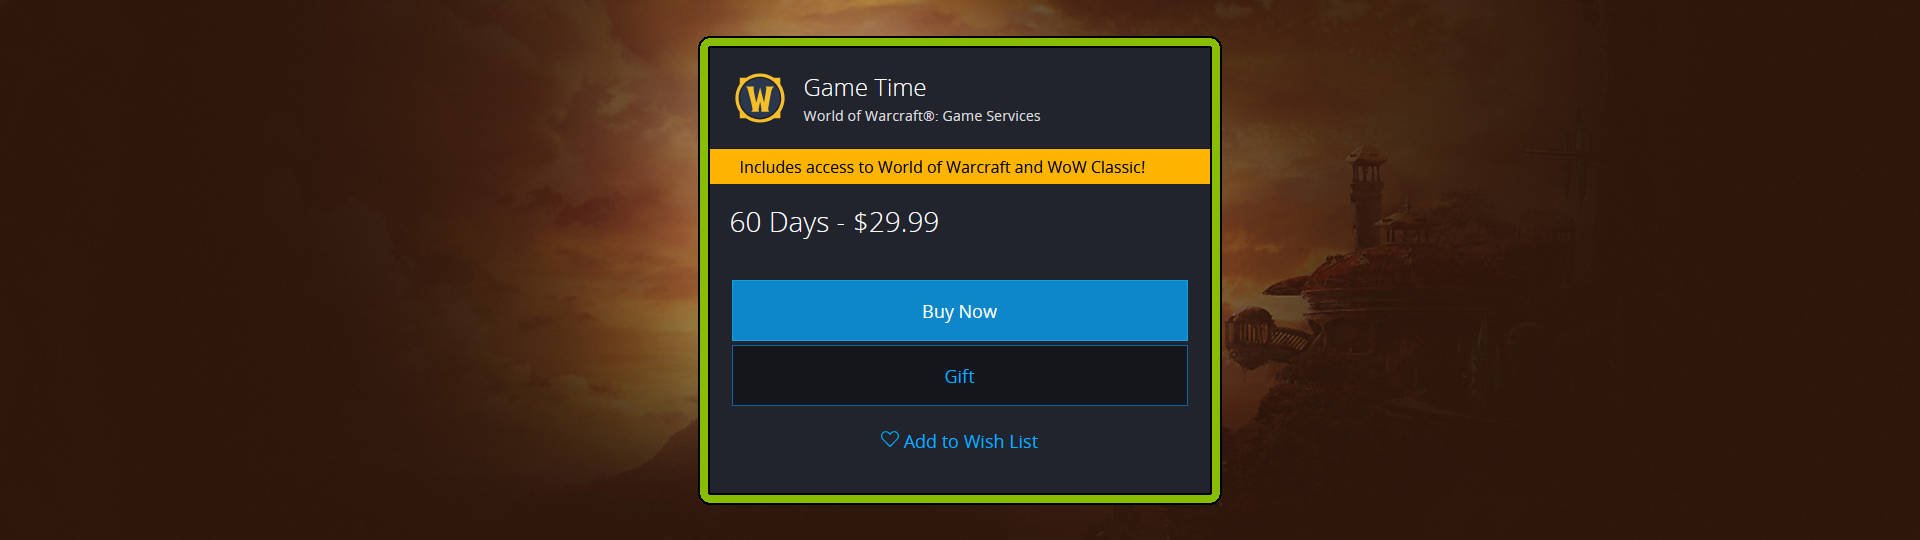 World of Warcraft Game Time slice